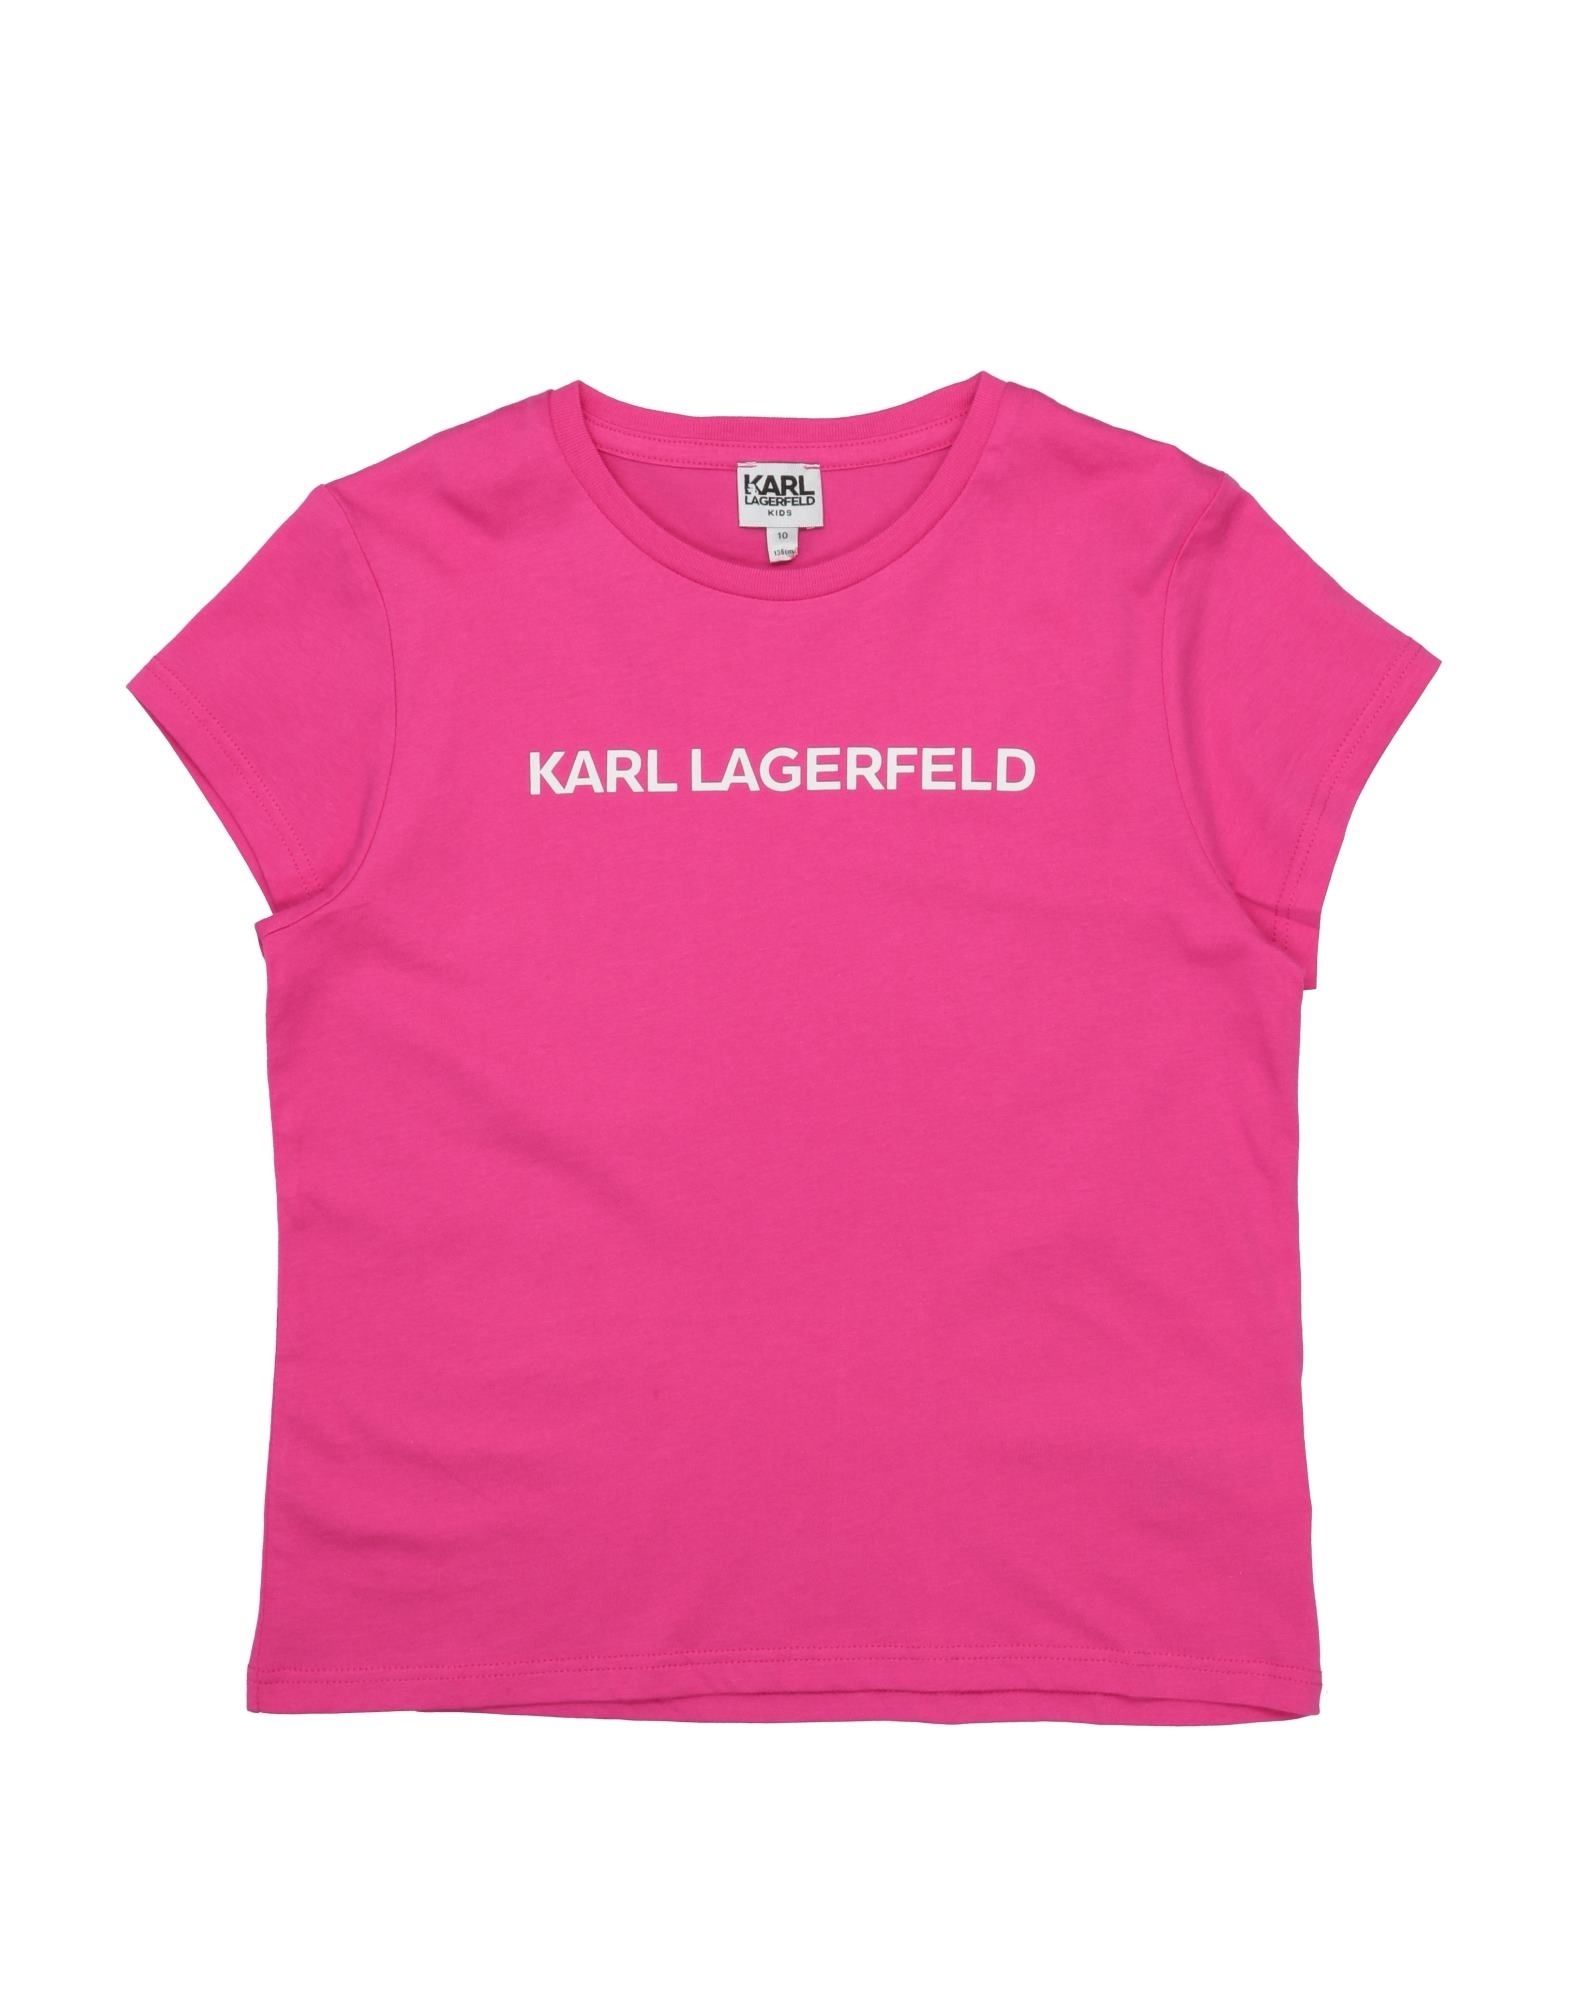 KARL LAGERFELD KARL LAGERFELD TODDLER GIRL T-SHIRT FUCHSIA SIZE 6 COTTON,12453760OH 4